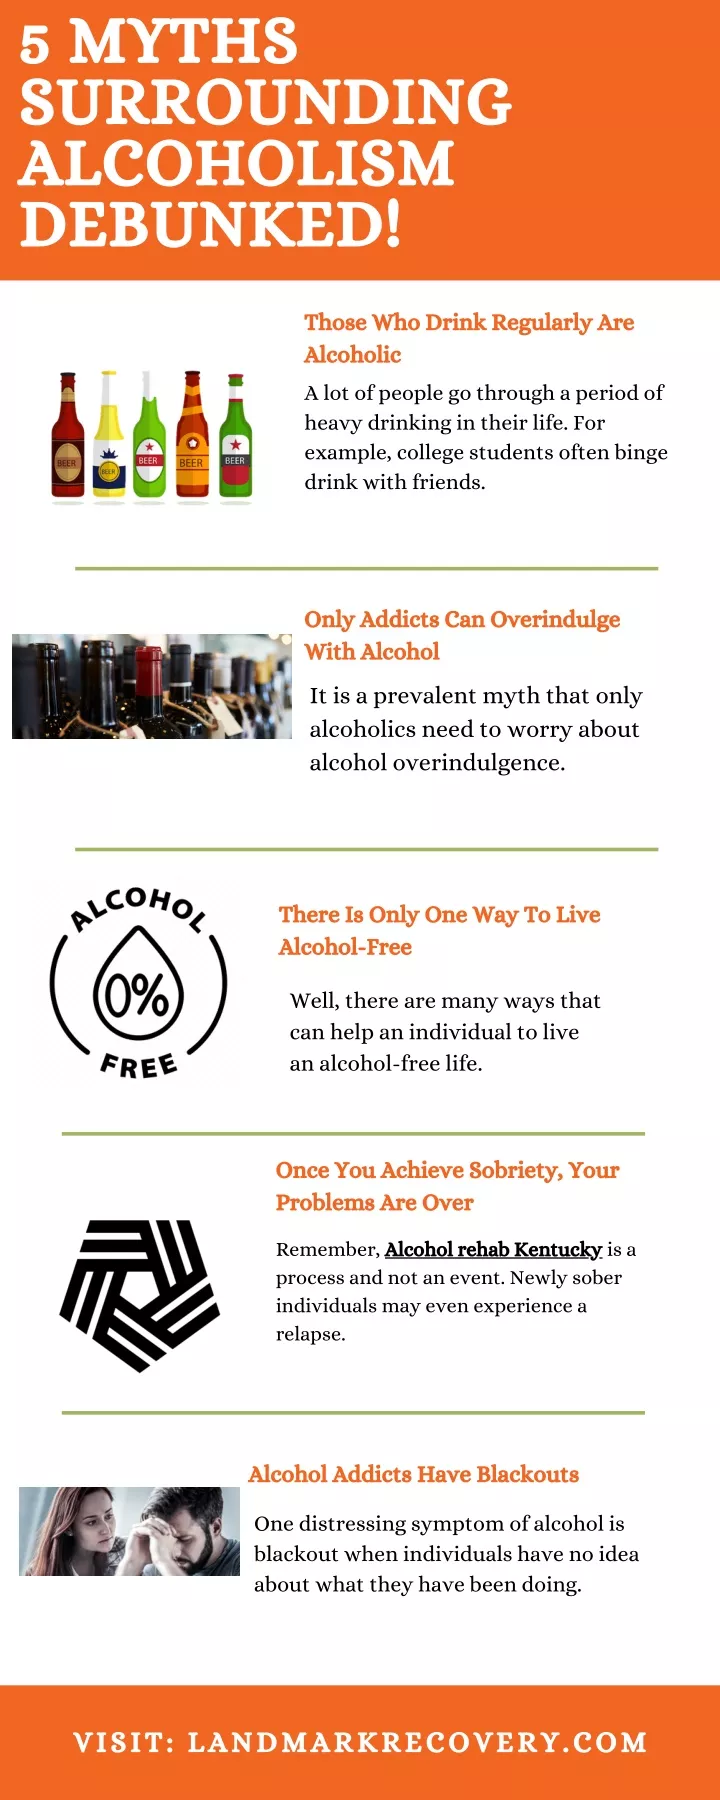 5 myths surrounding alcoholism debunked